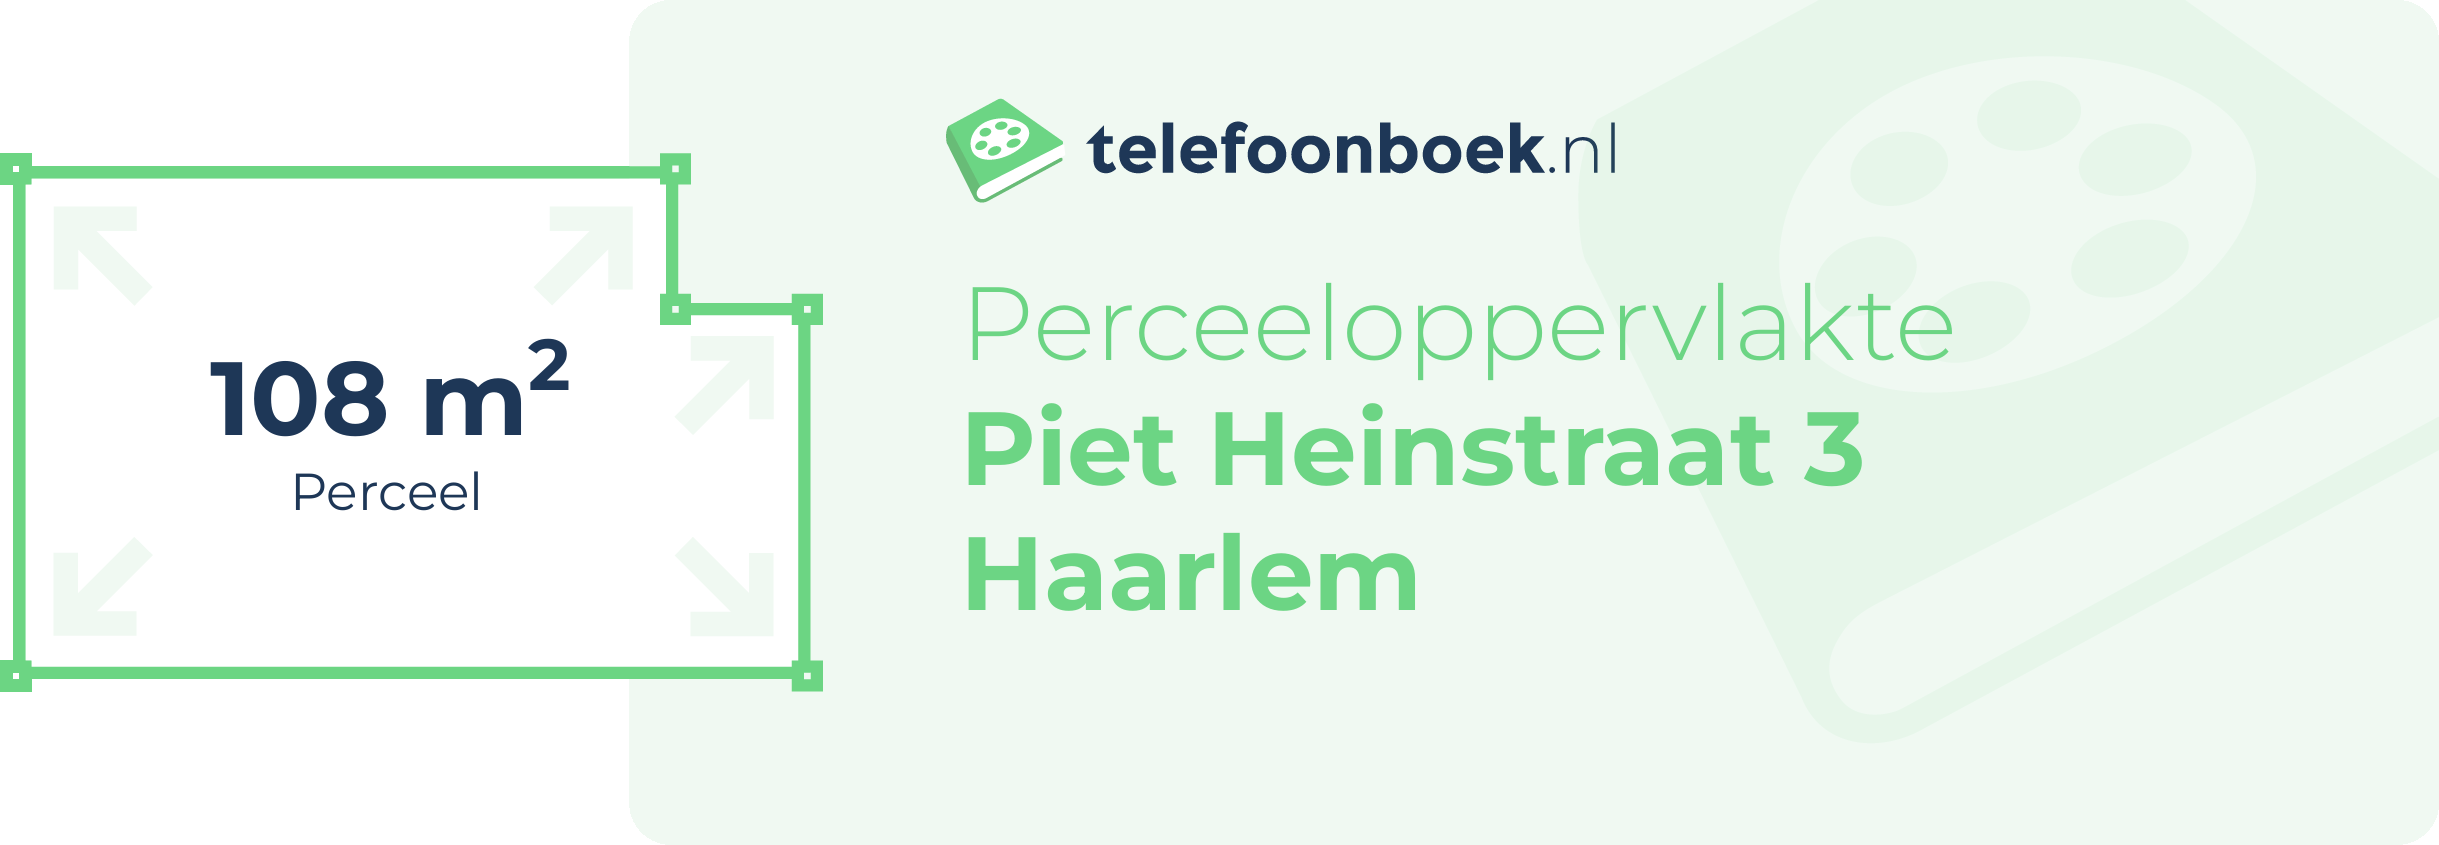 Perceeloppervlakte Piet Heinstraat 3 Haarlem